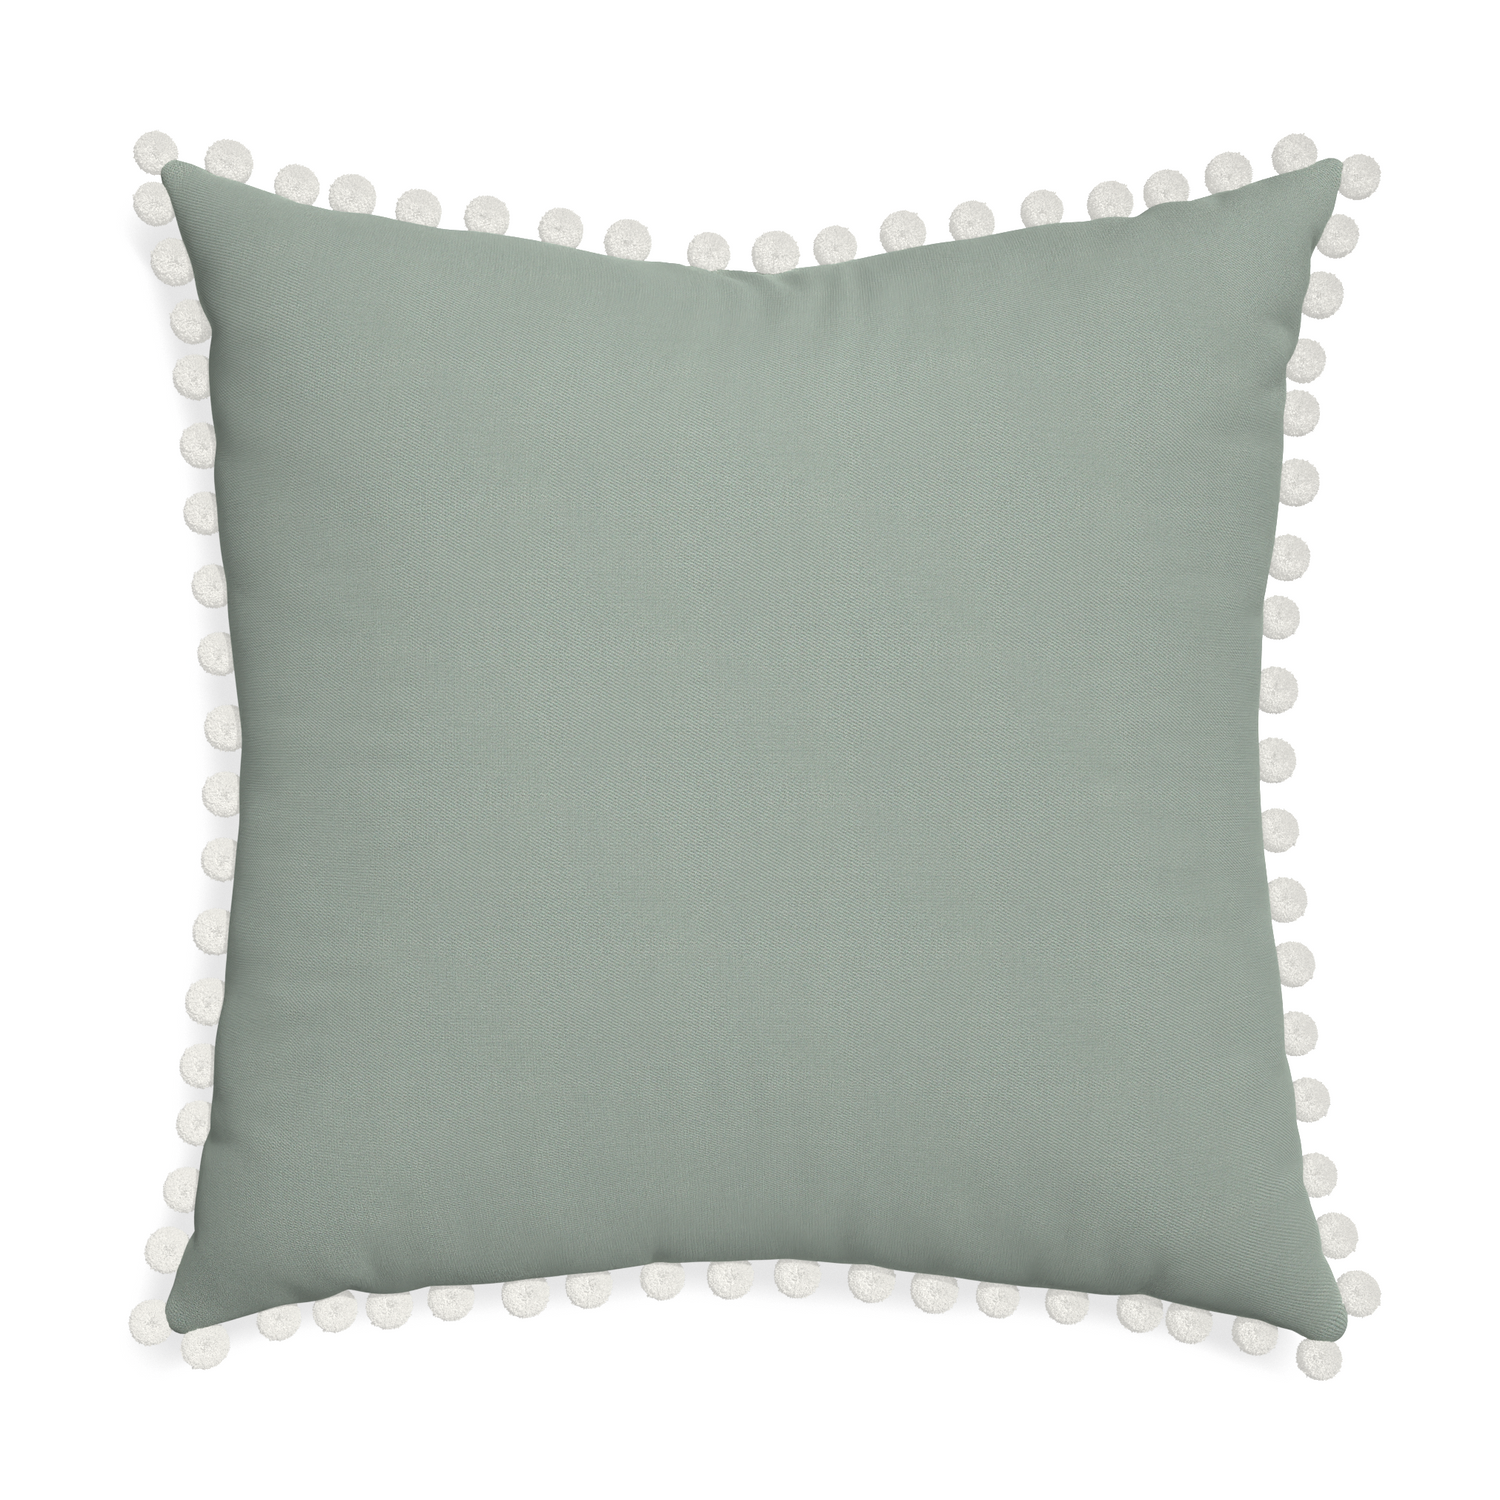 Euro-sham sage custom pillow with snow pom pom on white background